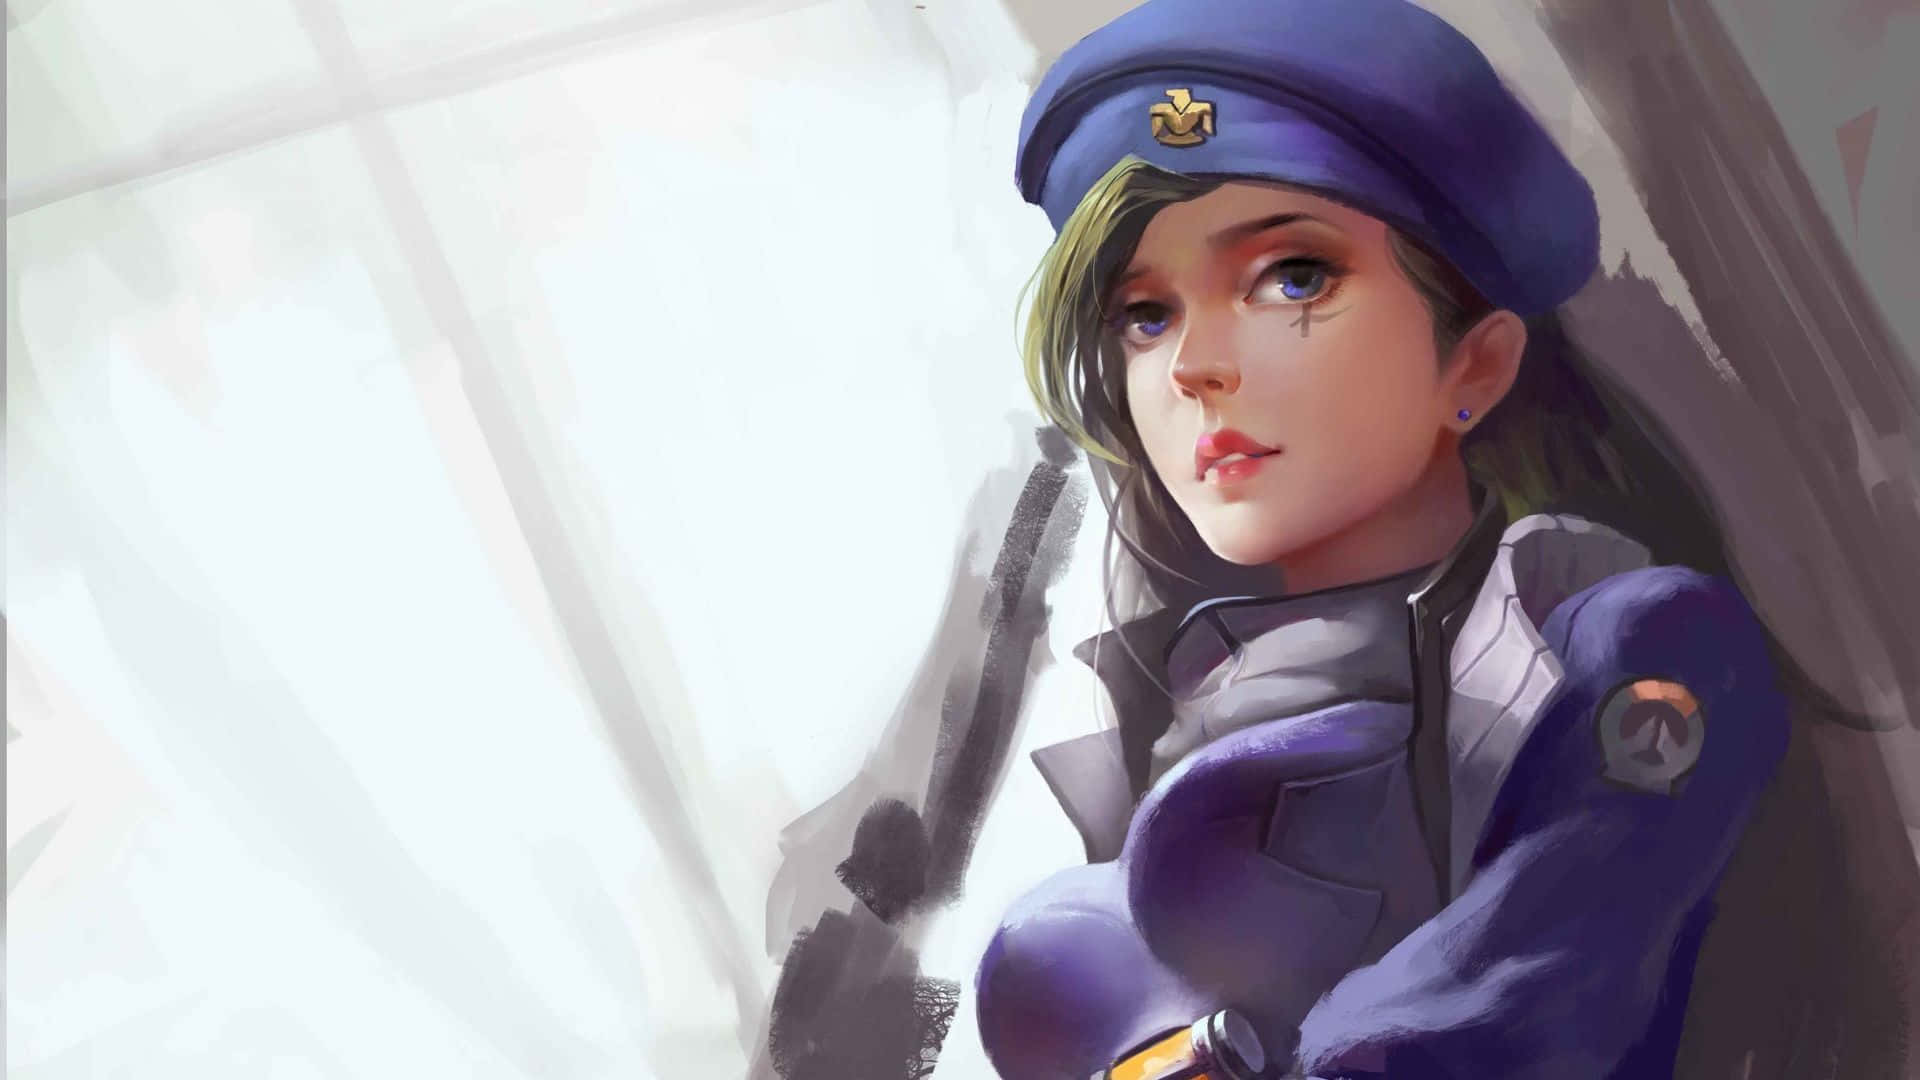 Overwatch Ana showcasing her sniping skills in a battlefield Wallpaper